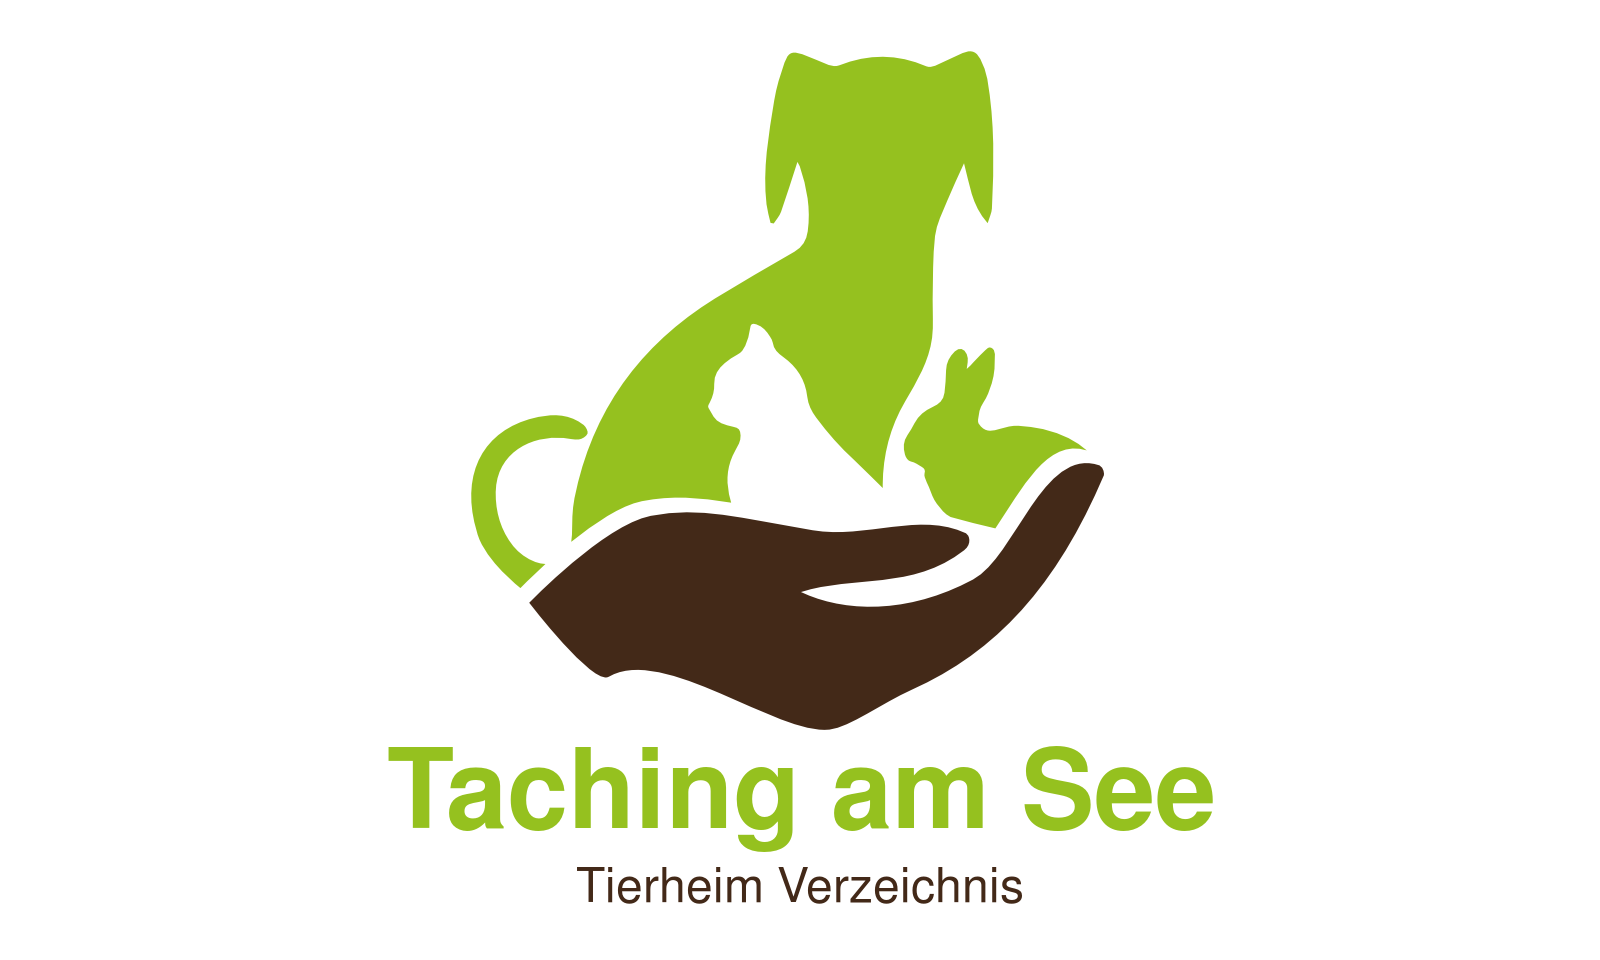 Tierheim Taching am See